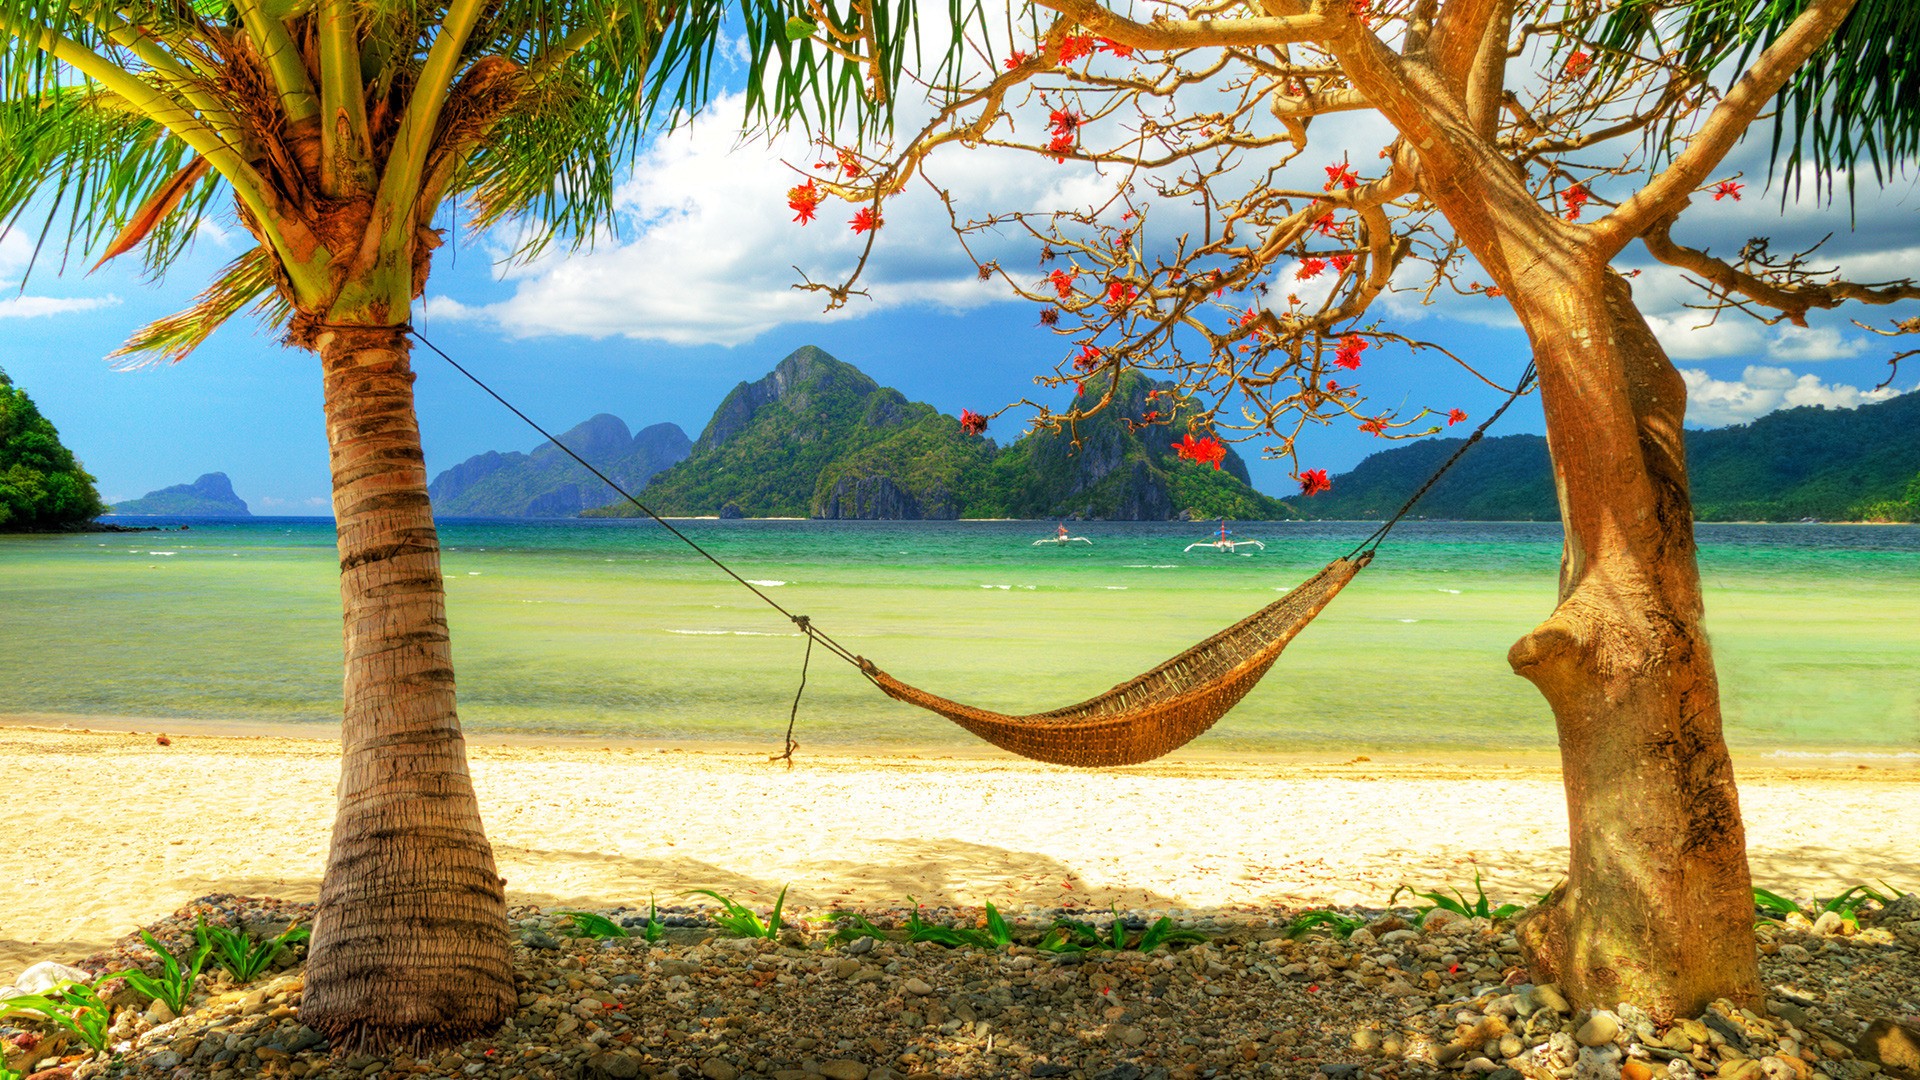 ocean, paradise, hammock, beaches - desktop wallpaper